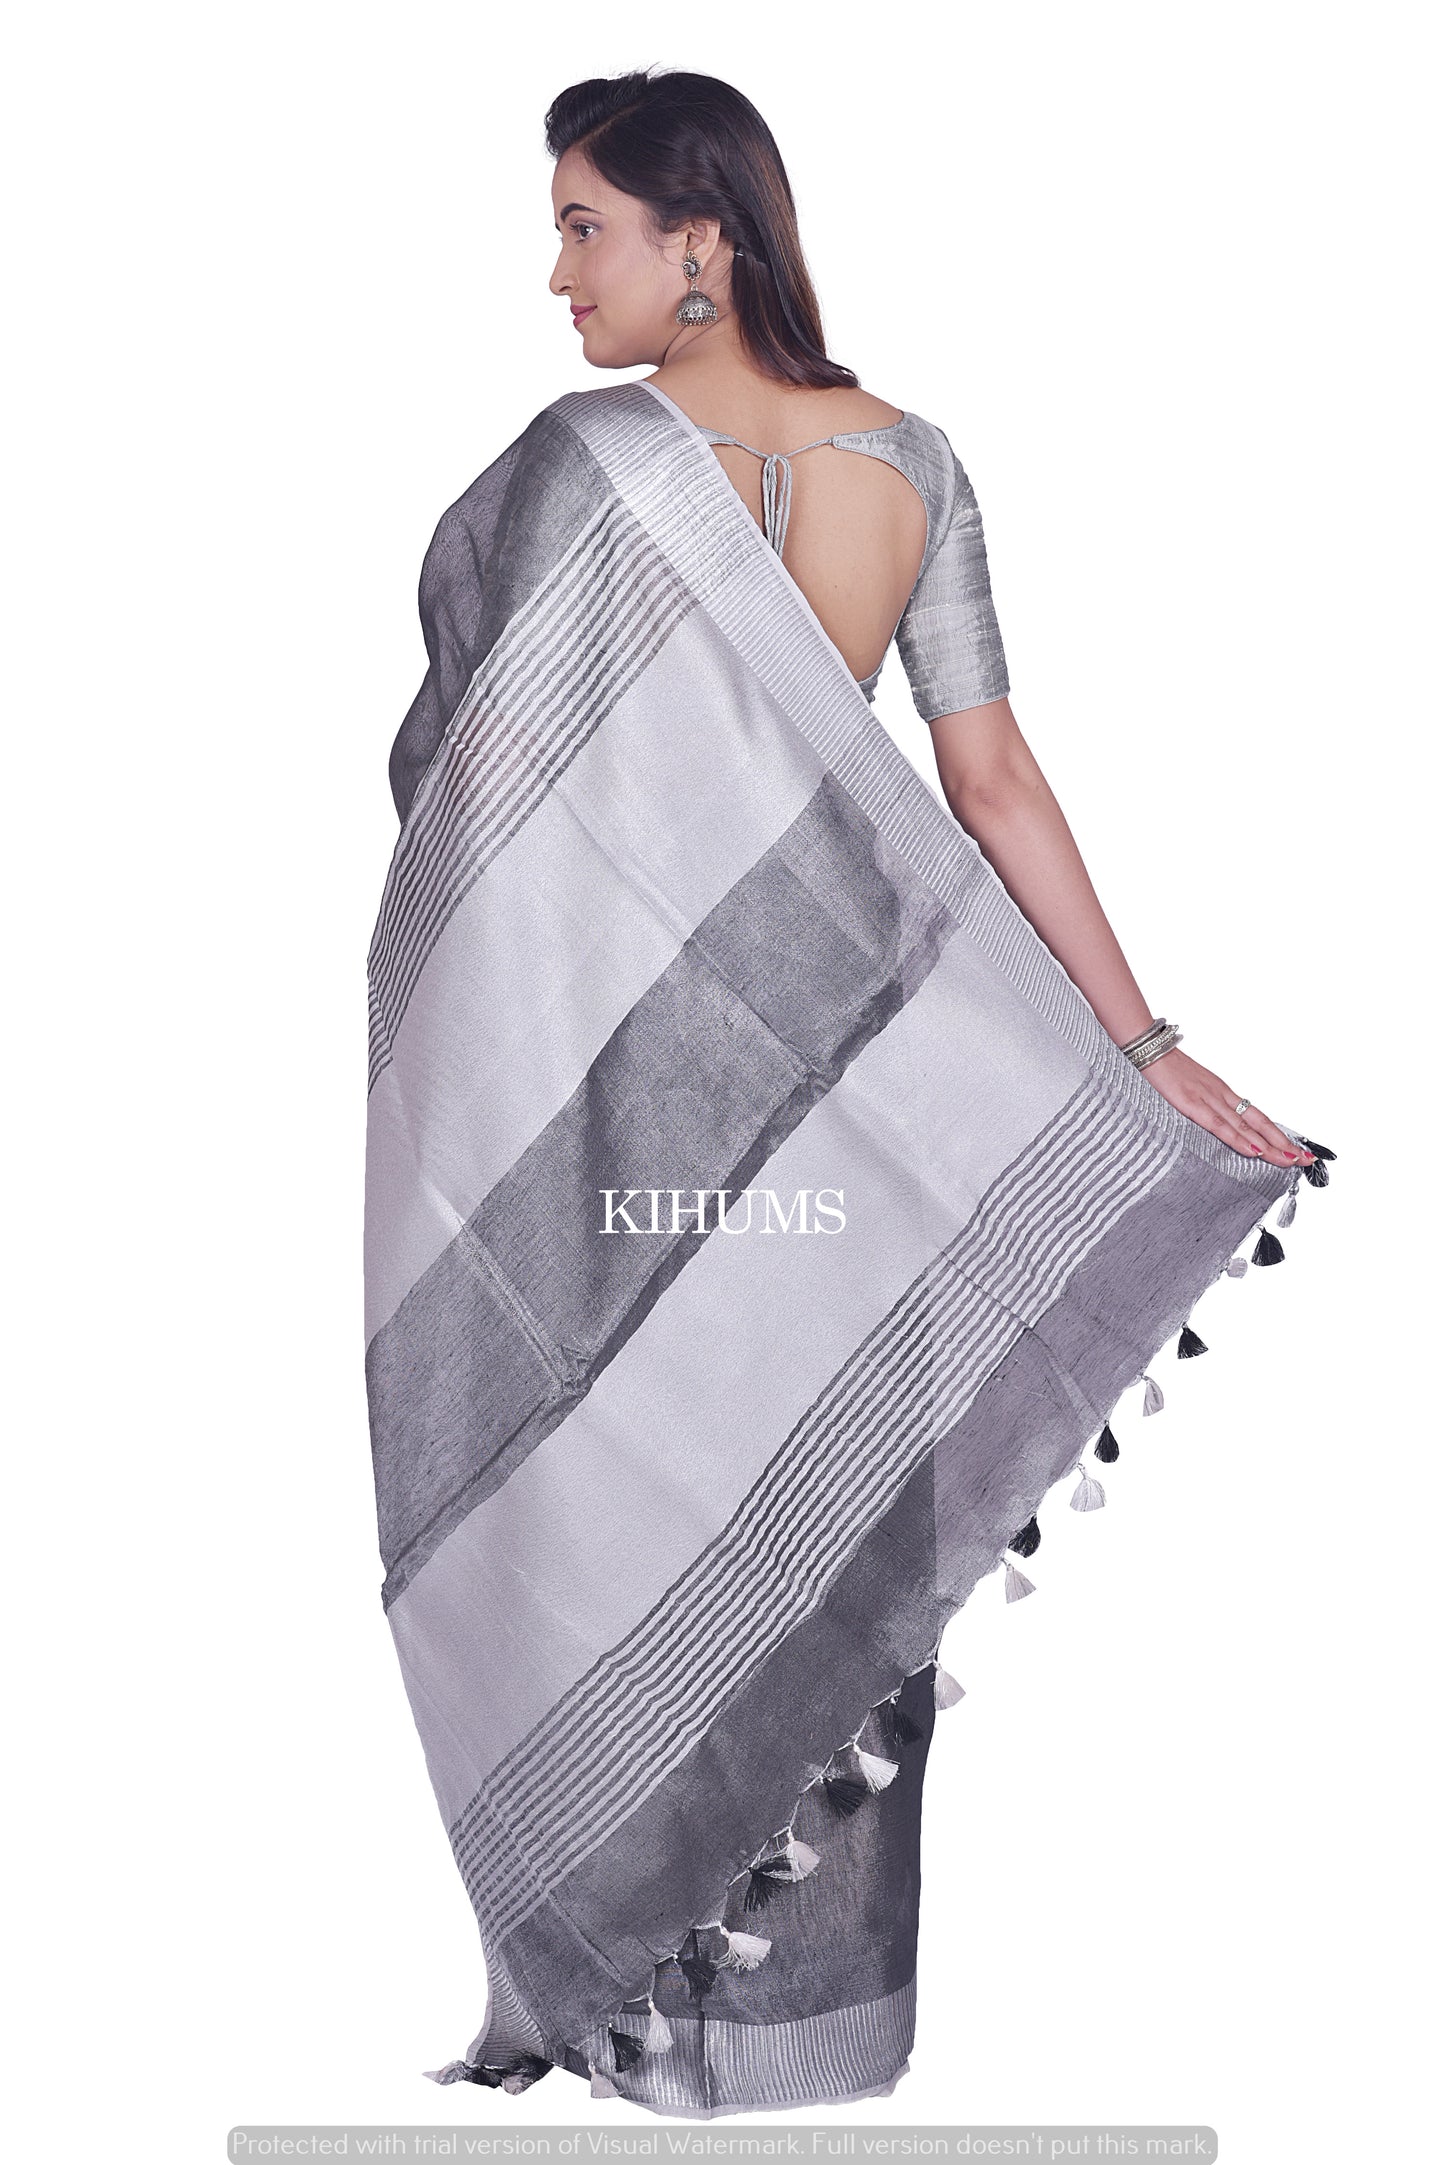 Black Shade with Silver Tinge | Tissue Linen Saree | KIHUMS Saree